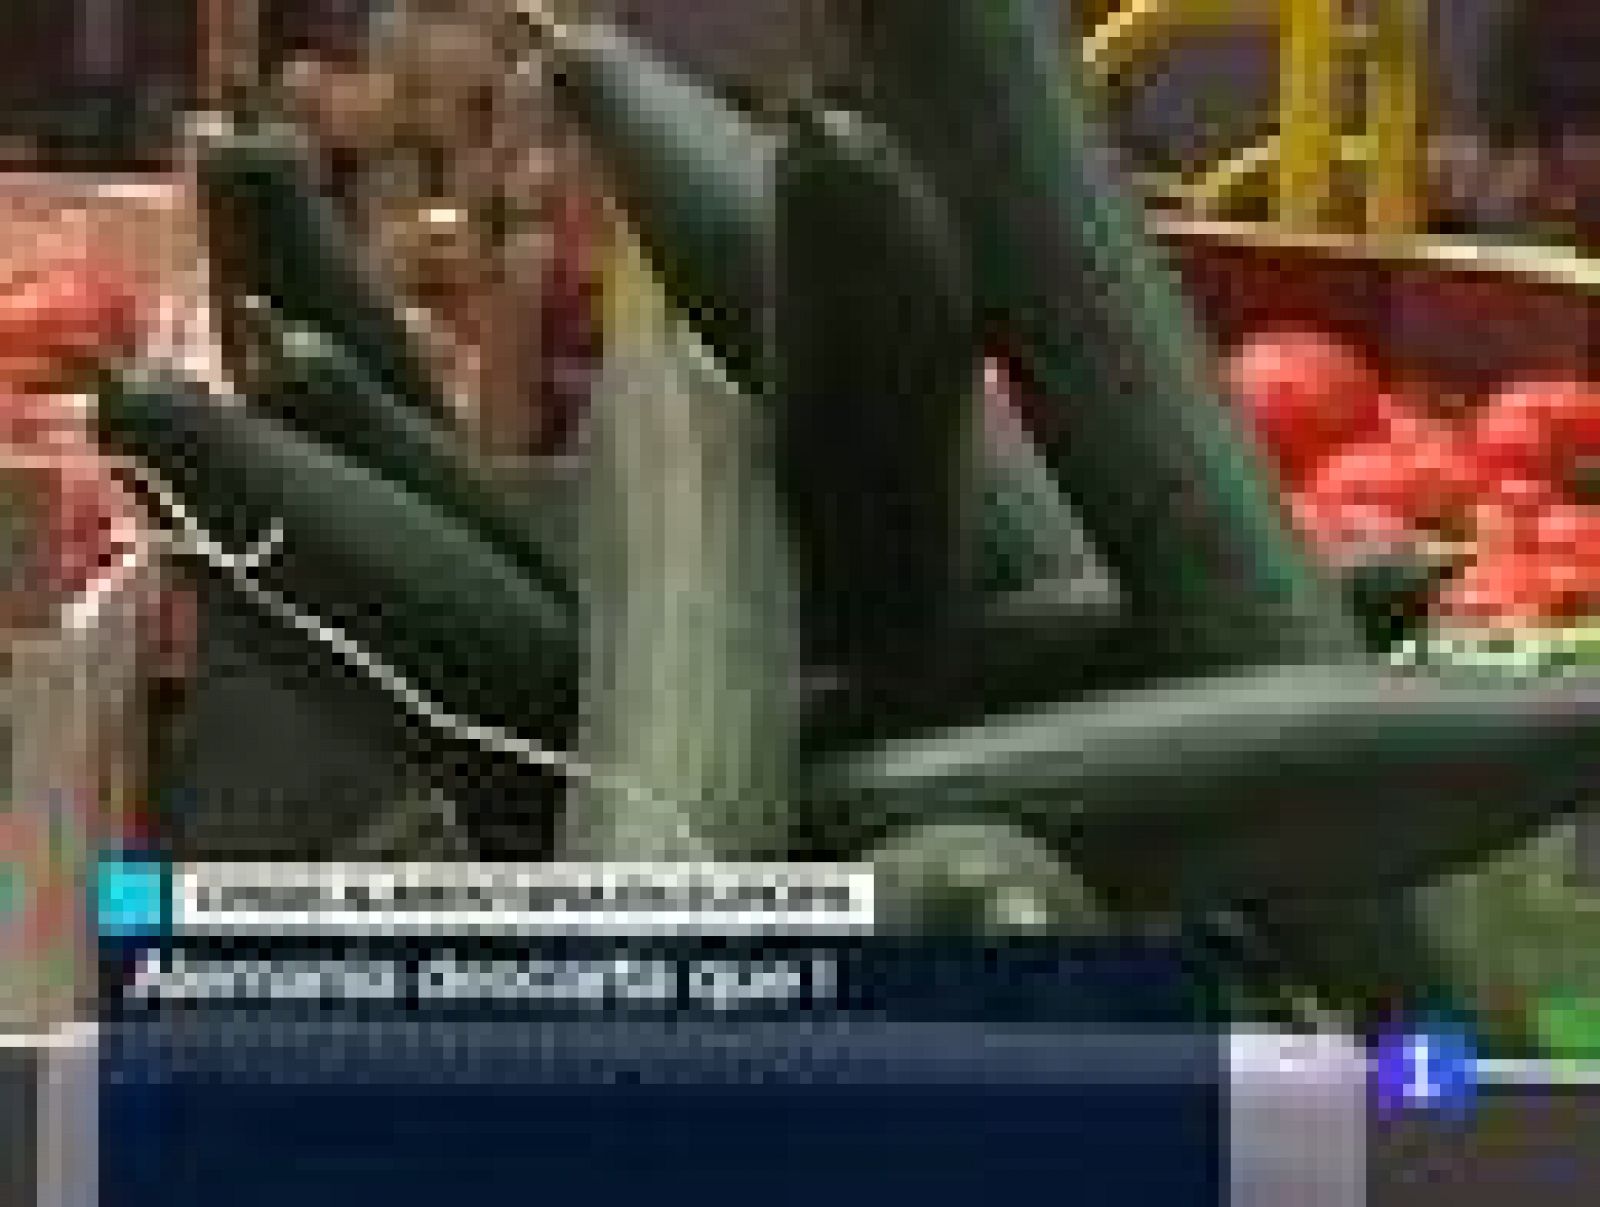 Telediario 1: Telediario 2 en 4' - 31/05/11 | RTVE Play